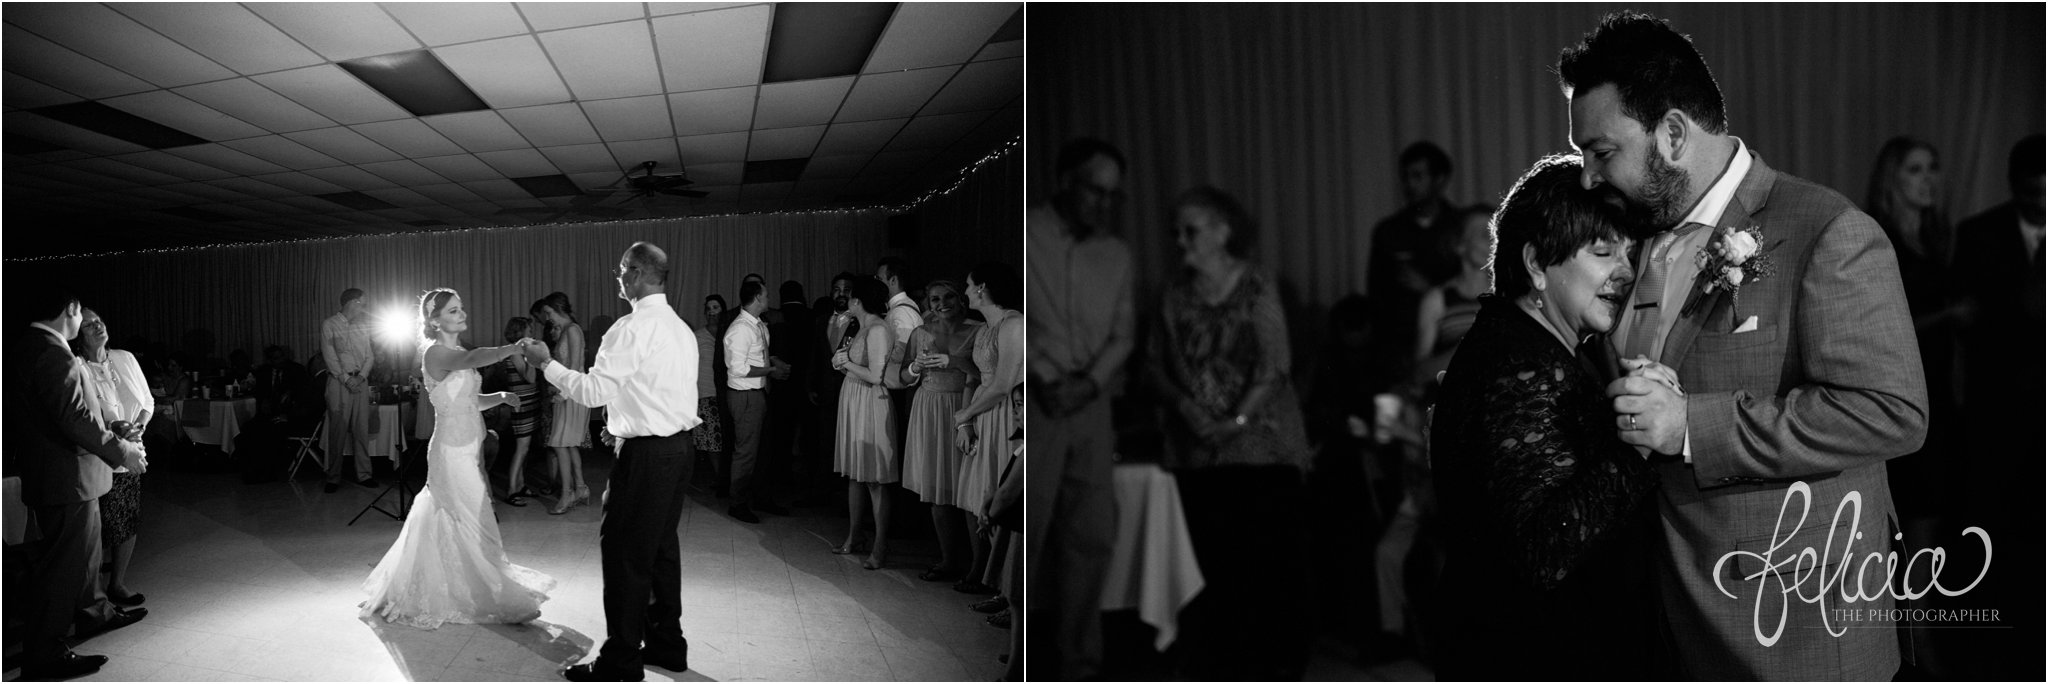 Black and White | Wedding | Wedding Photography | Wedding Photos | Travel Photographer | Images by feliciathephotographer.com | Kansas | Wedding Reception | Reception Activities | Father Daughter Dance | Mother Son Dance 